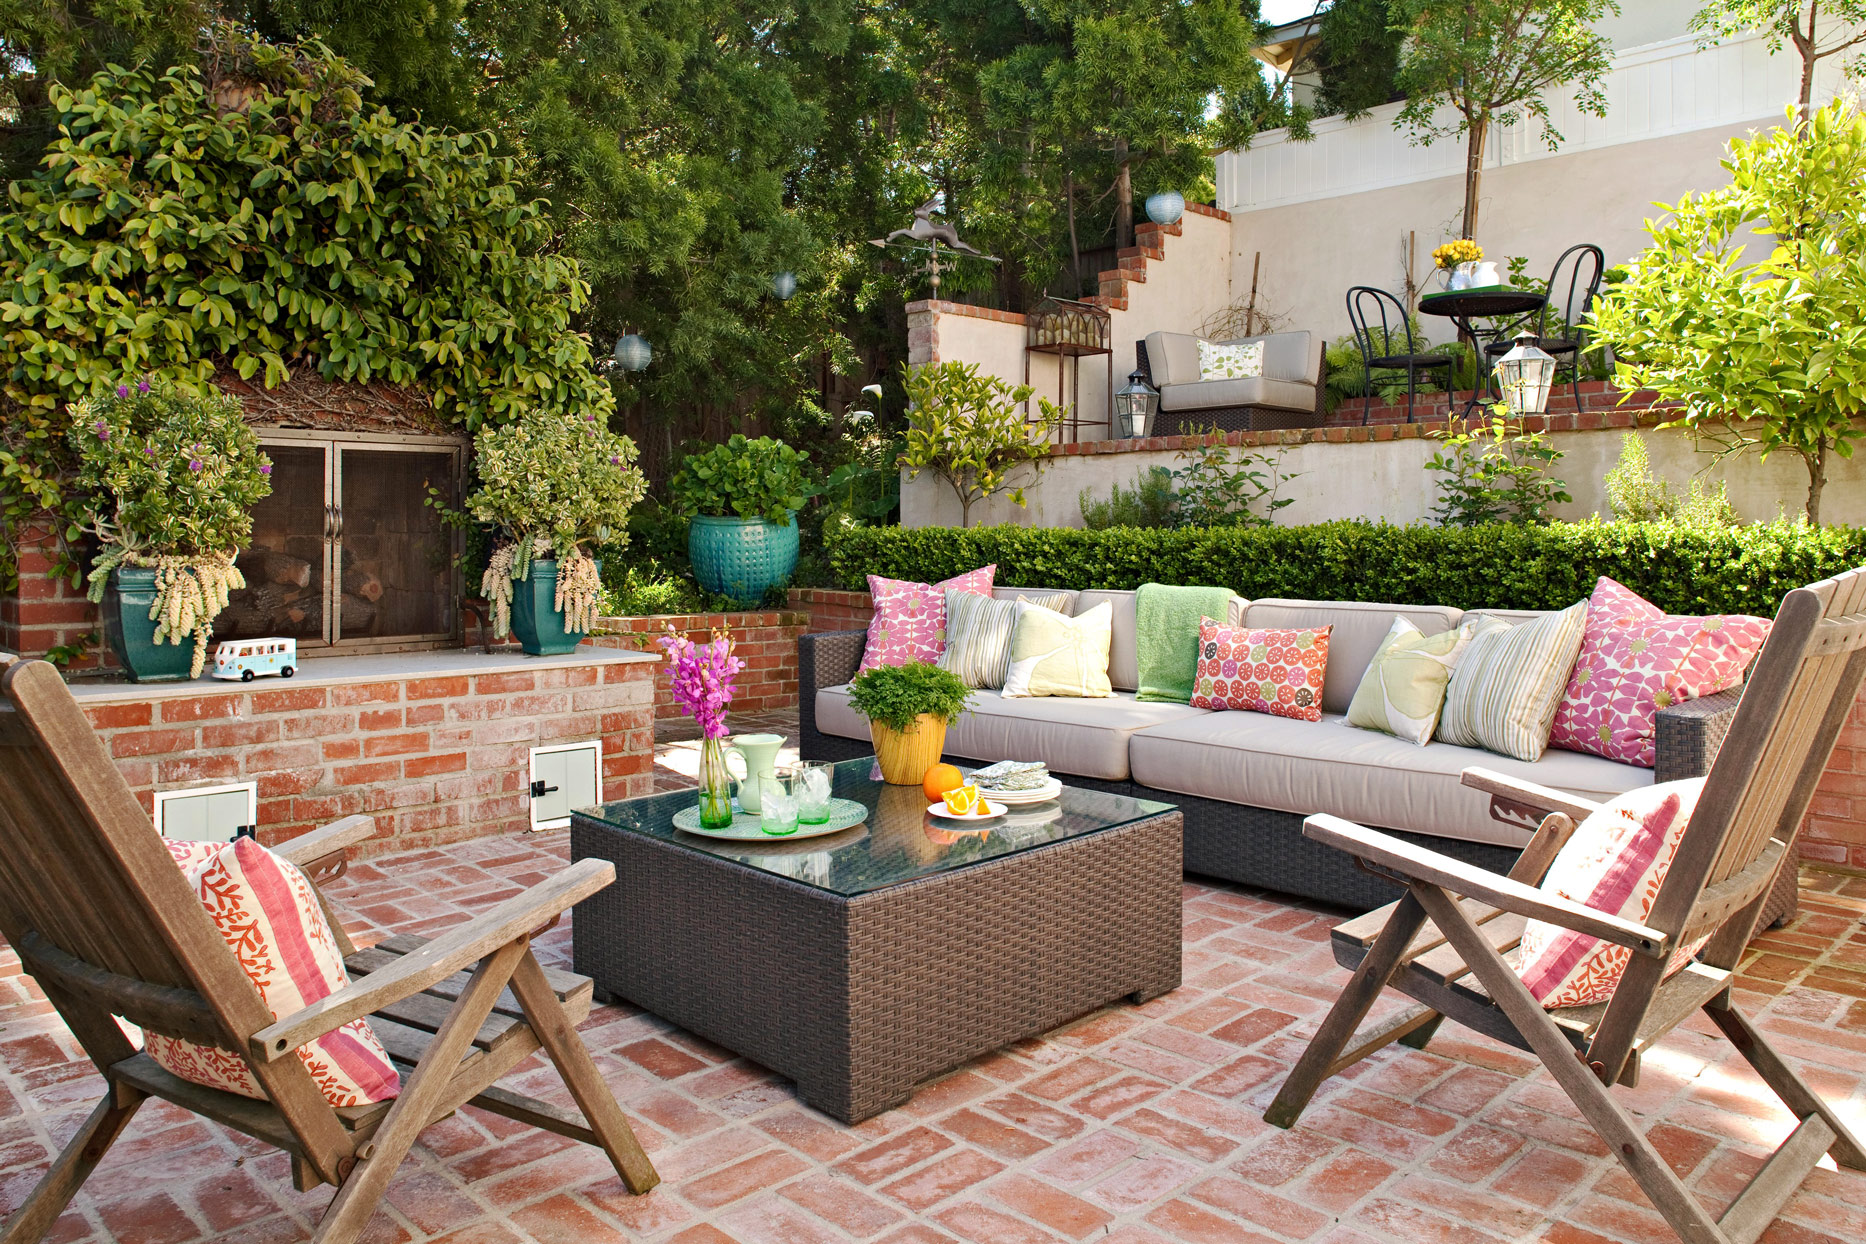 Choosing Between an Outdoor Chair or Sofa for Your Garden